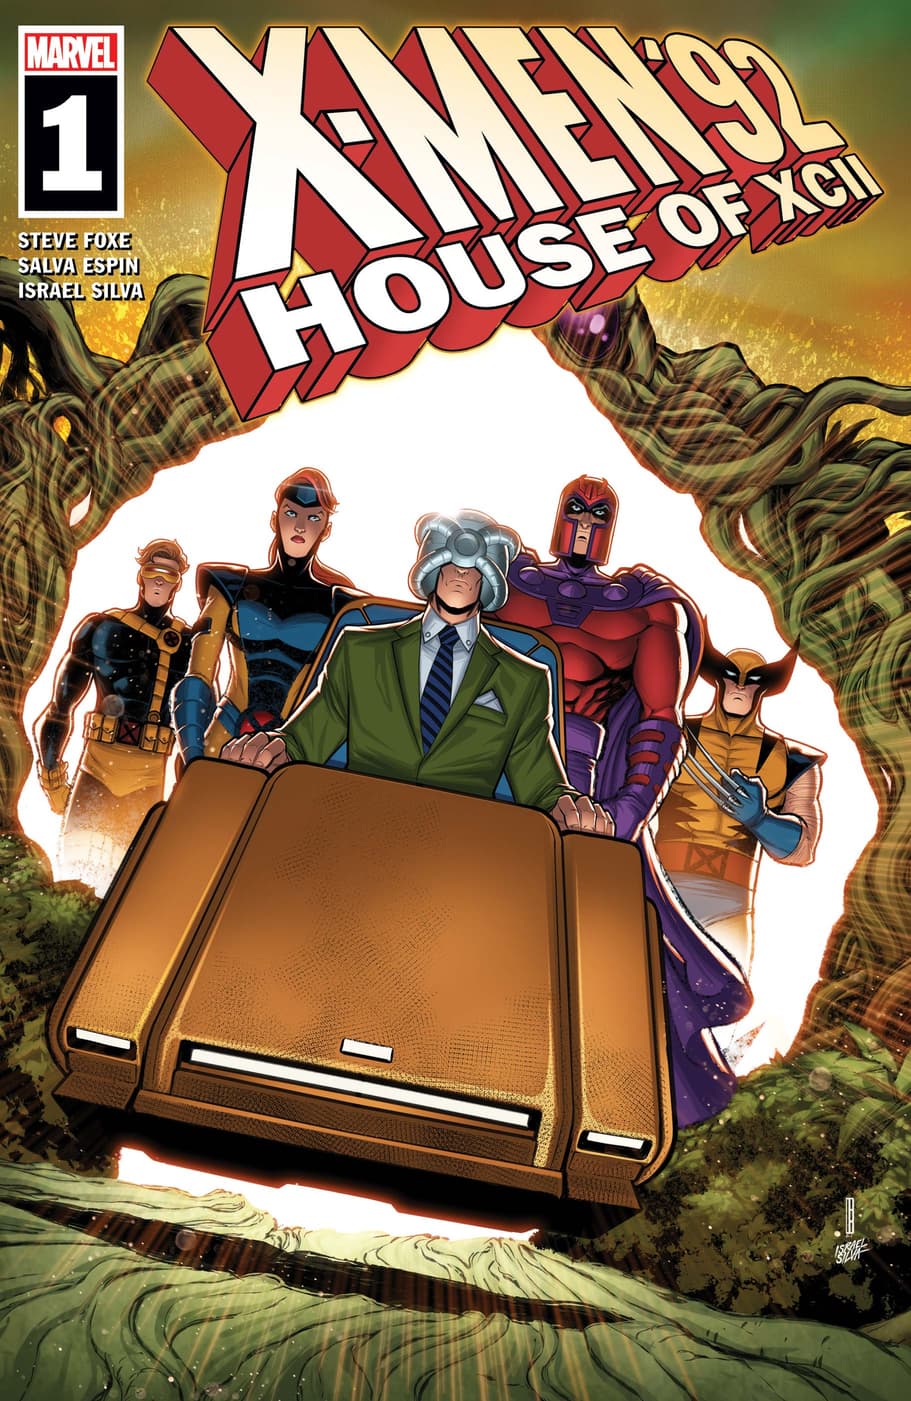 X-MEN ’92: HOUSE OF XCII #1 cover by David Baldeon